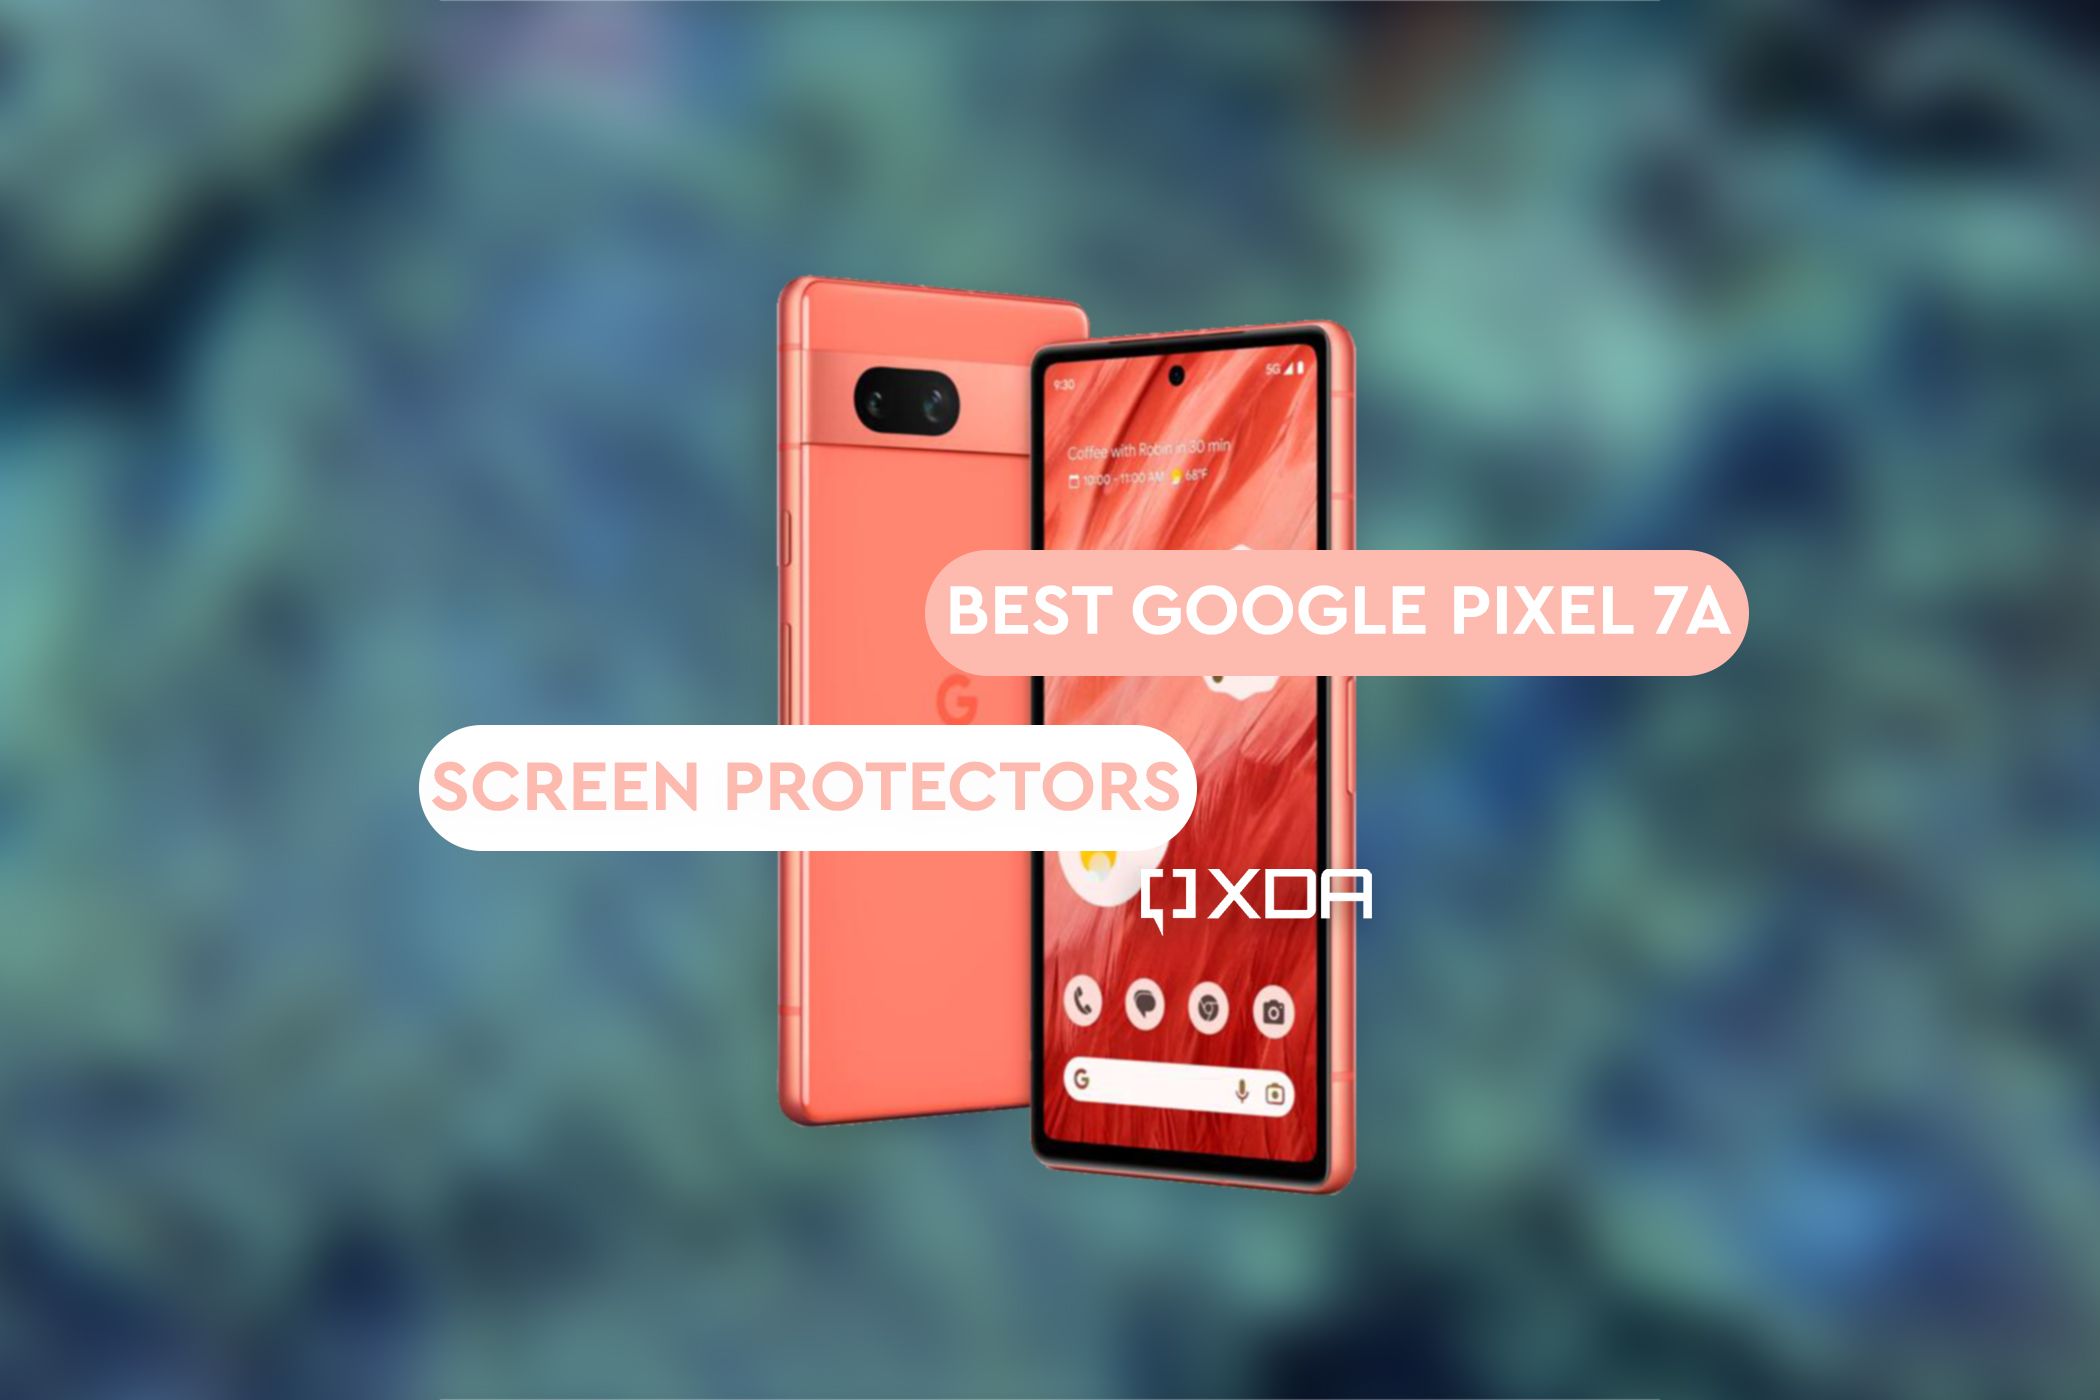 Best Google Pixel 7a screen protectors featured.